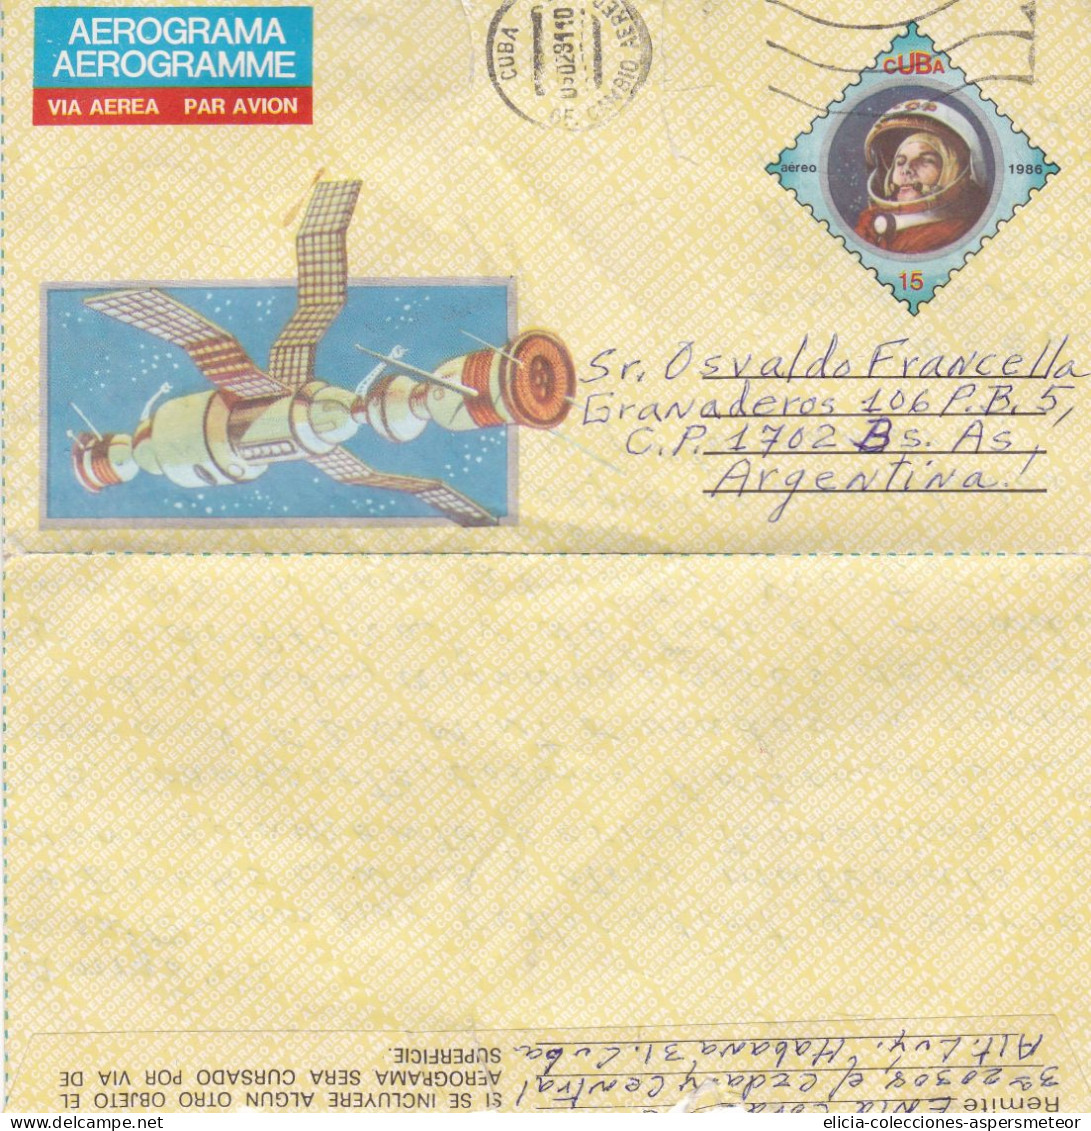 Cuba - 1991 - Aerogramme - La Habana To Argentina - Airmail - Caja 30 - Posta Aerea